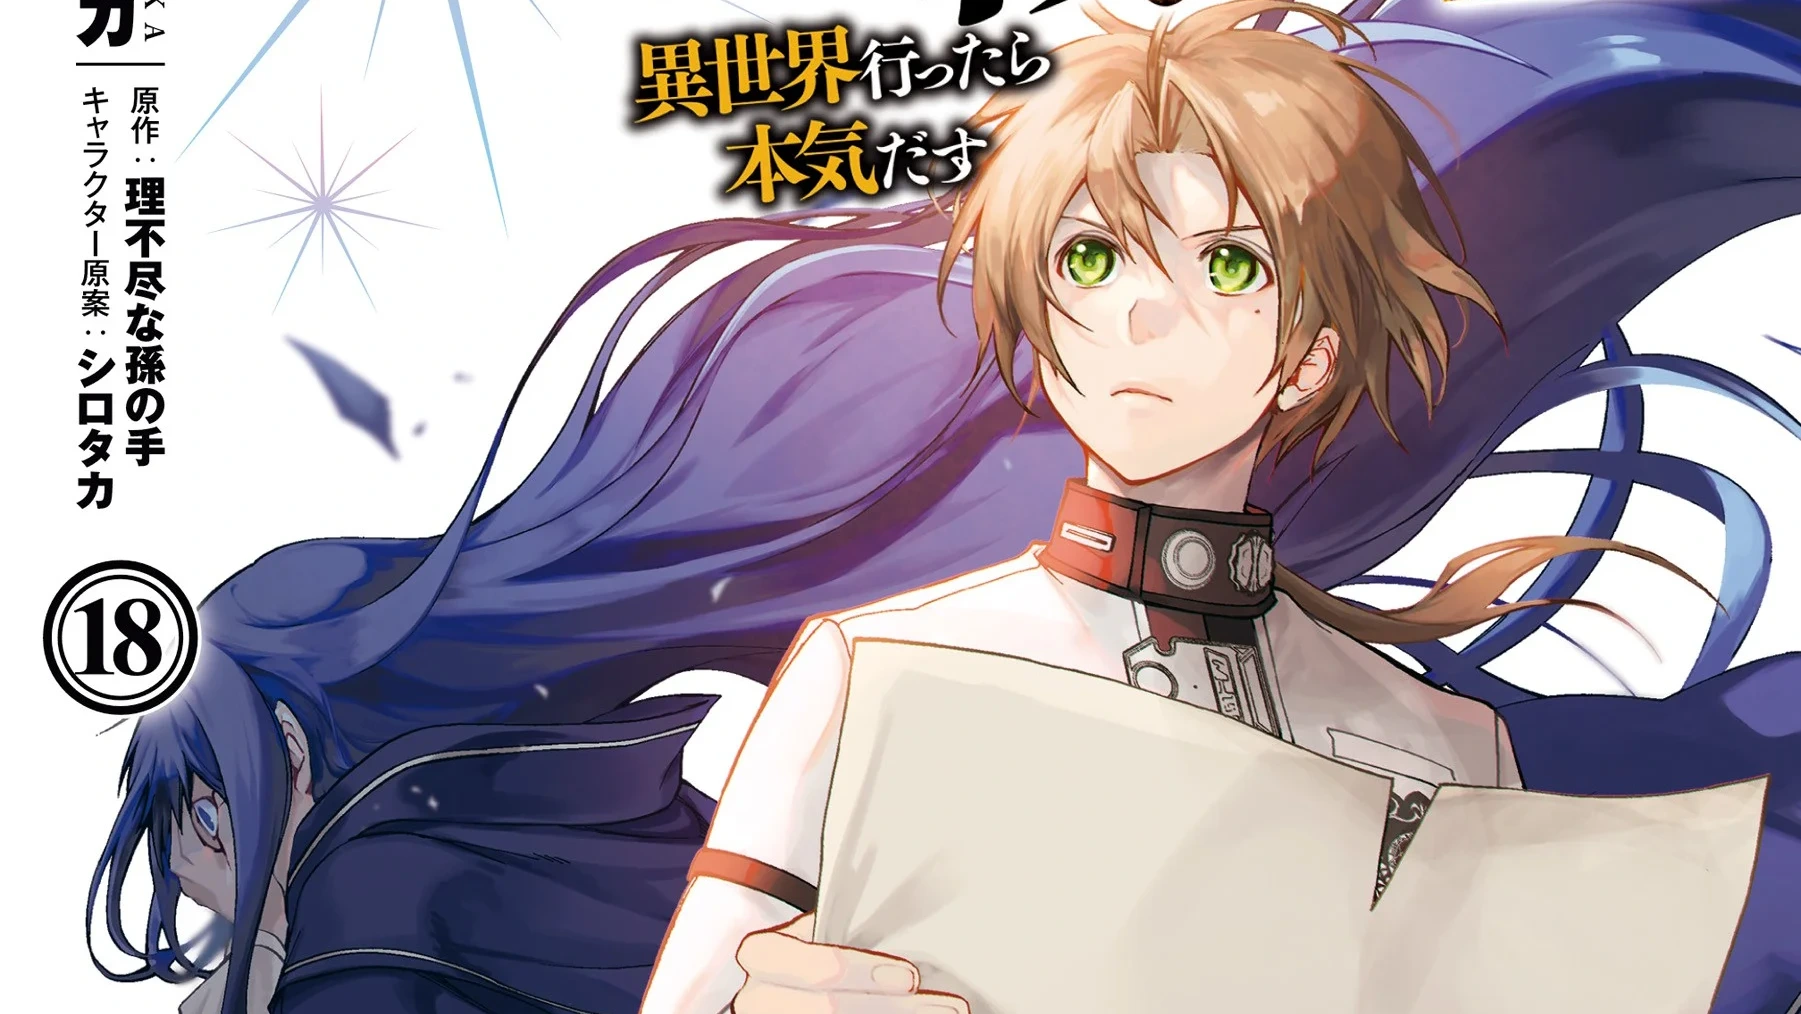 Is Mushoku Tensei: Jobless Reincarnation Light Novel Finished?